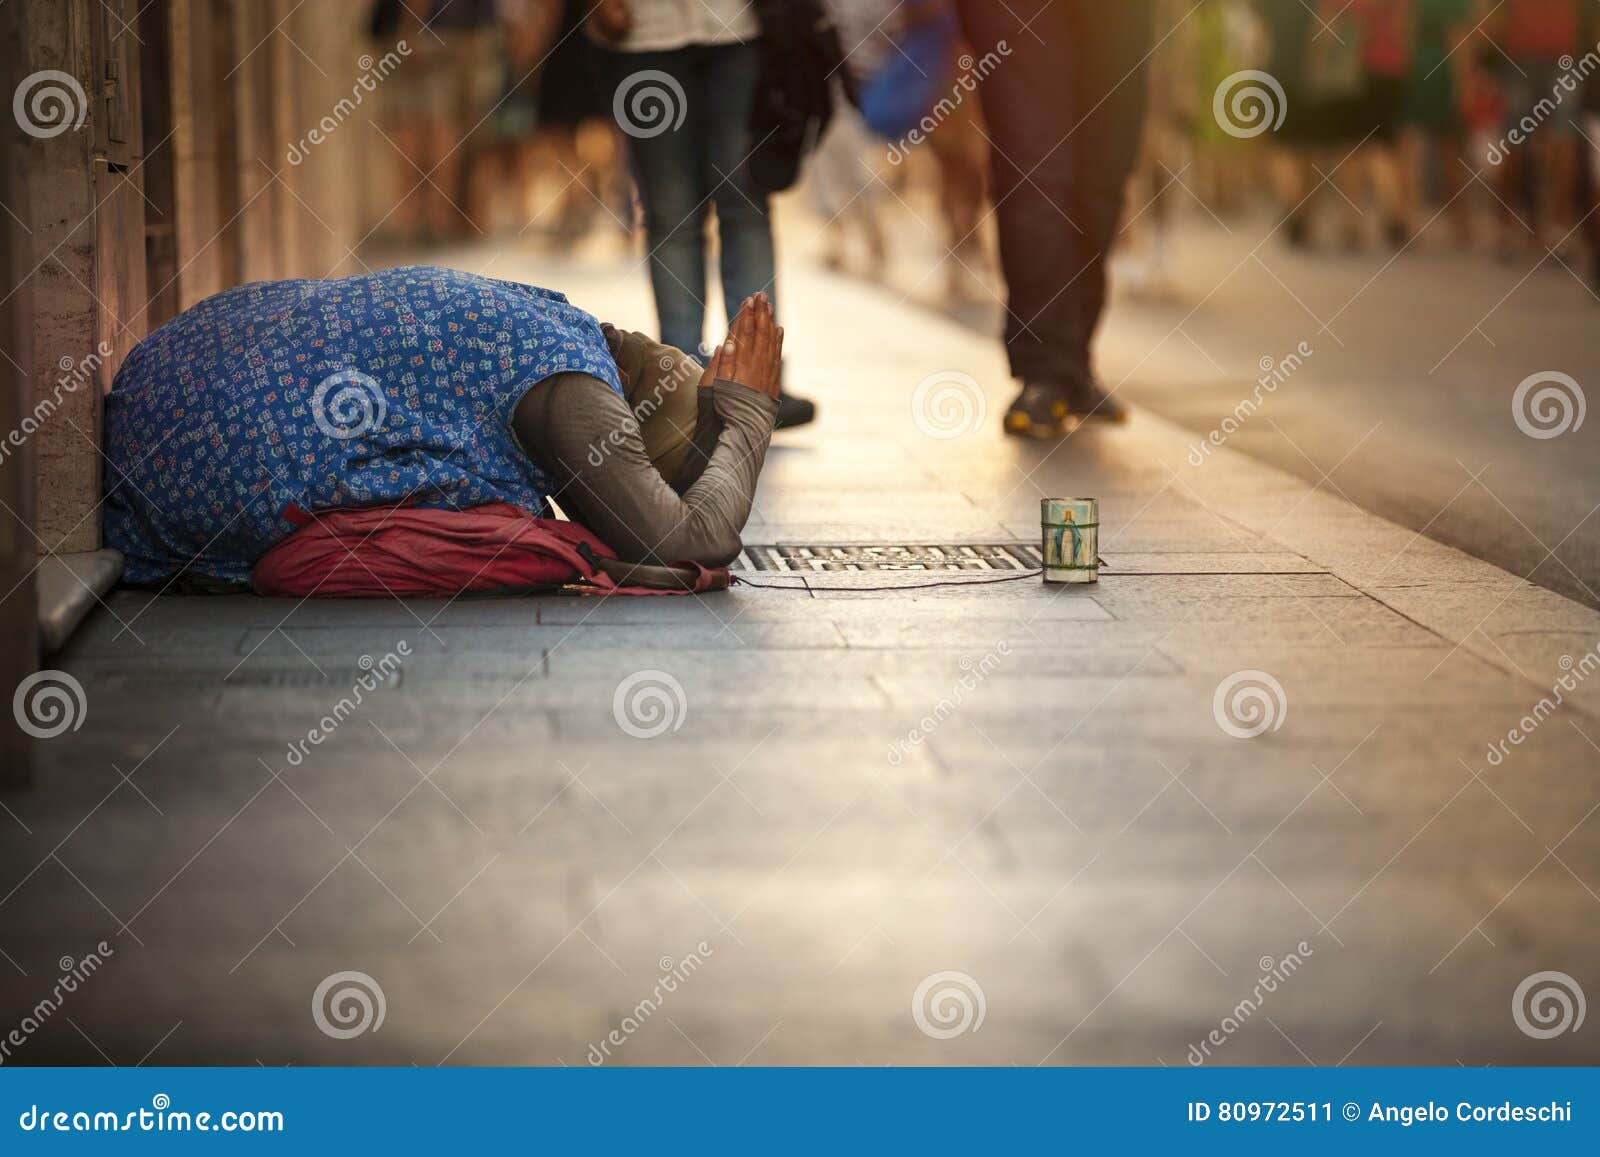 homeless beggar. woman asking for alms. street. rome italy